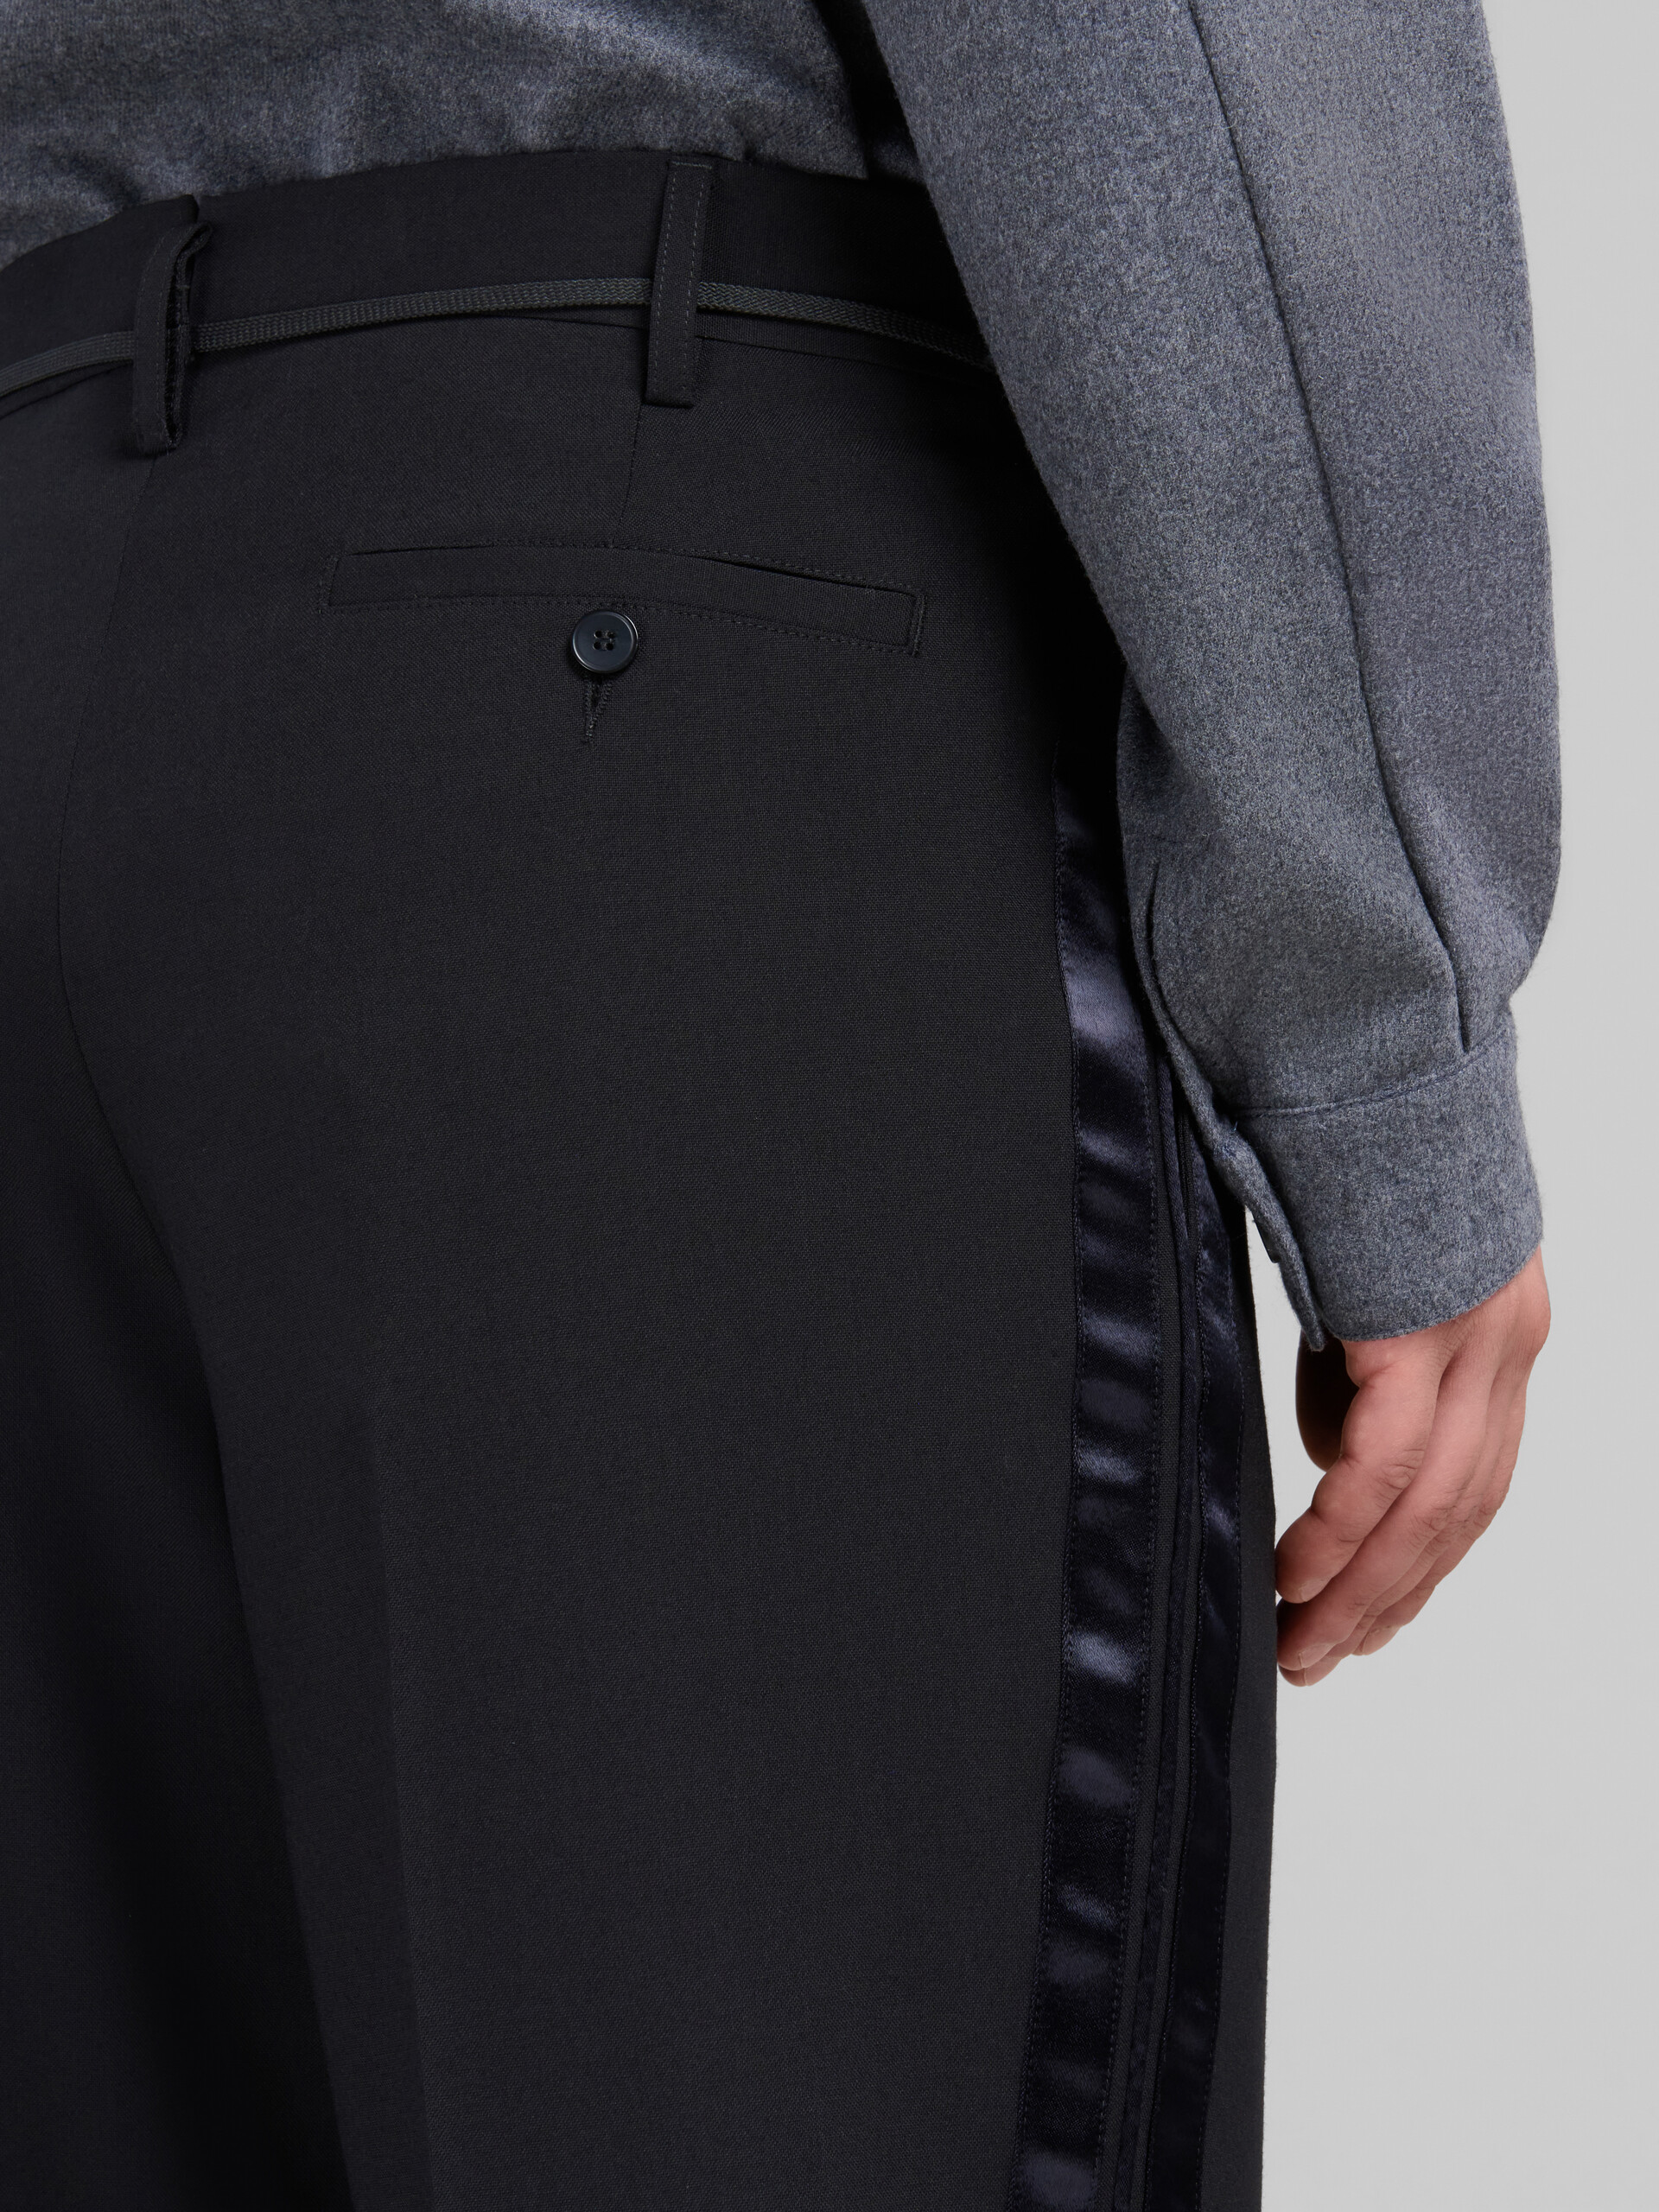 Pantalones negros de lana tropical con rayas de satén - Pantalones - Image 4